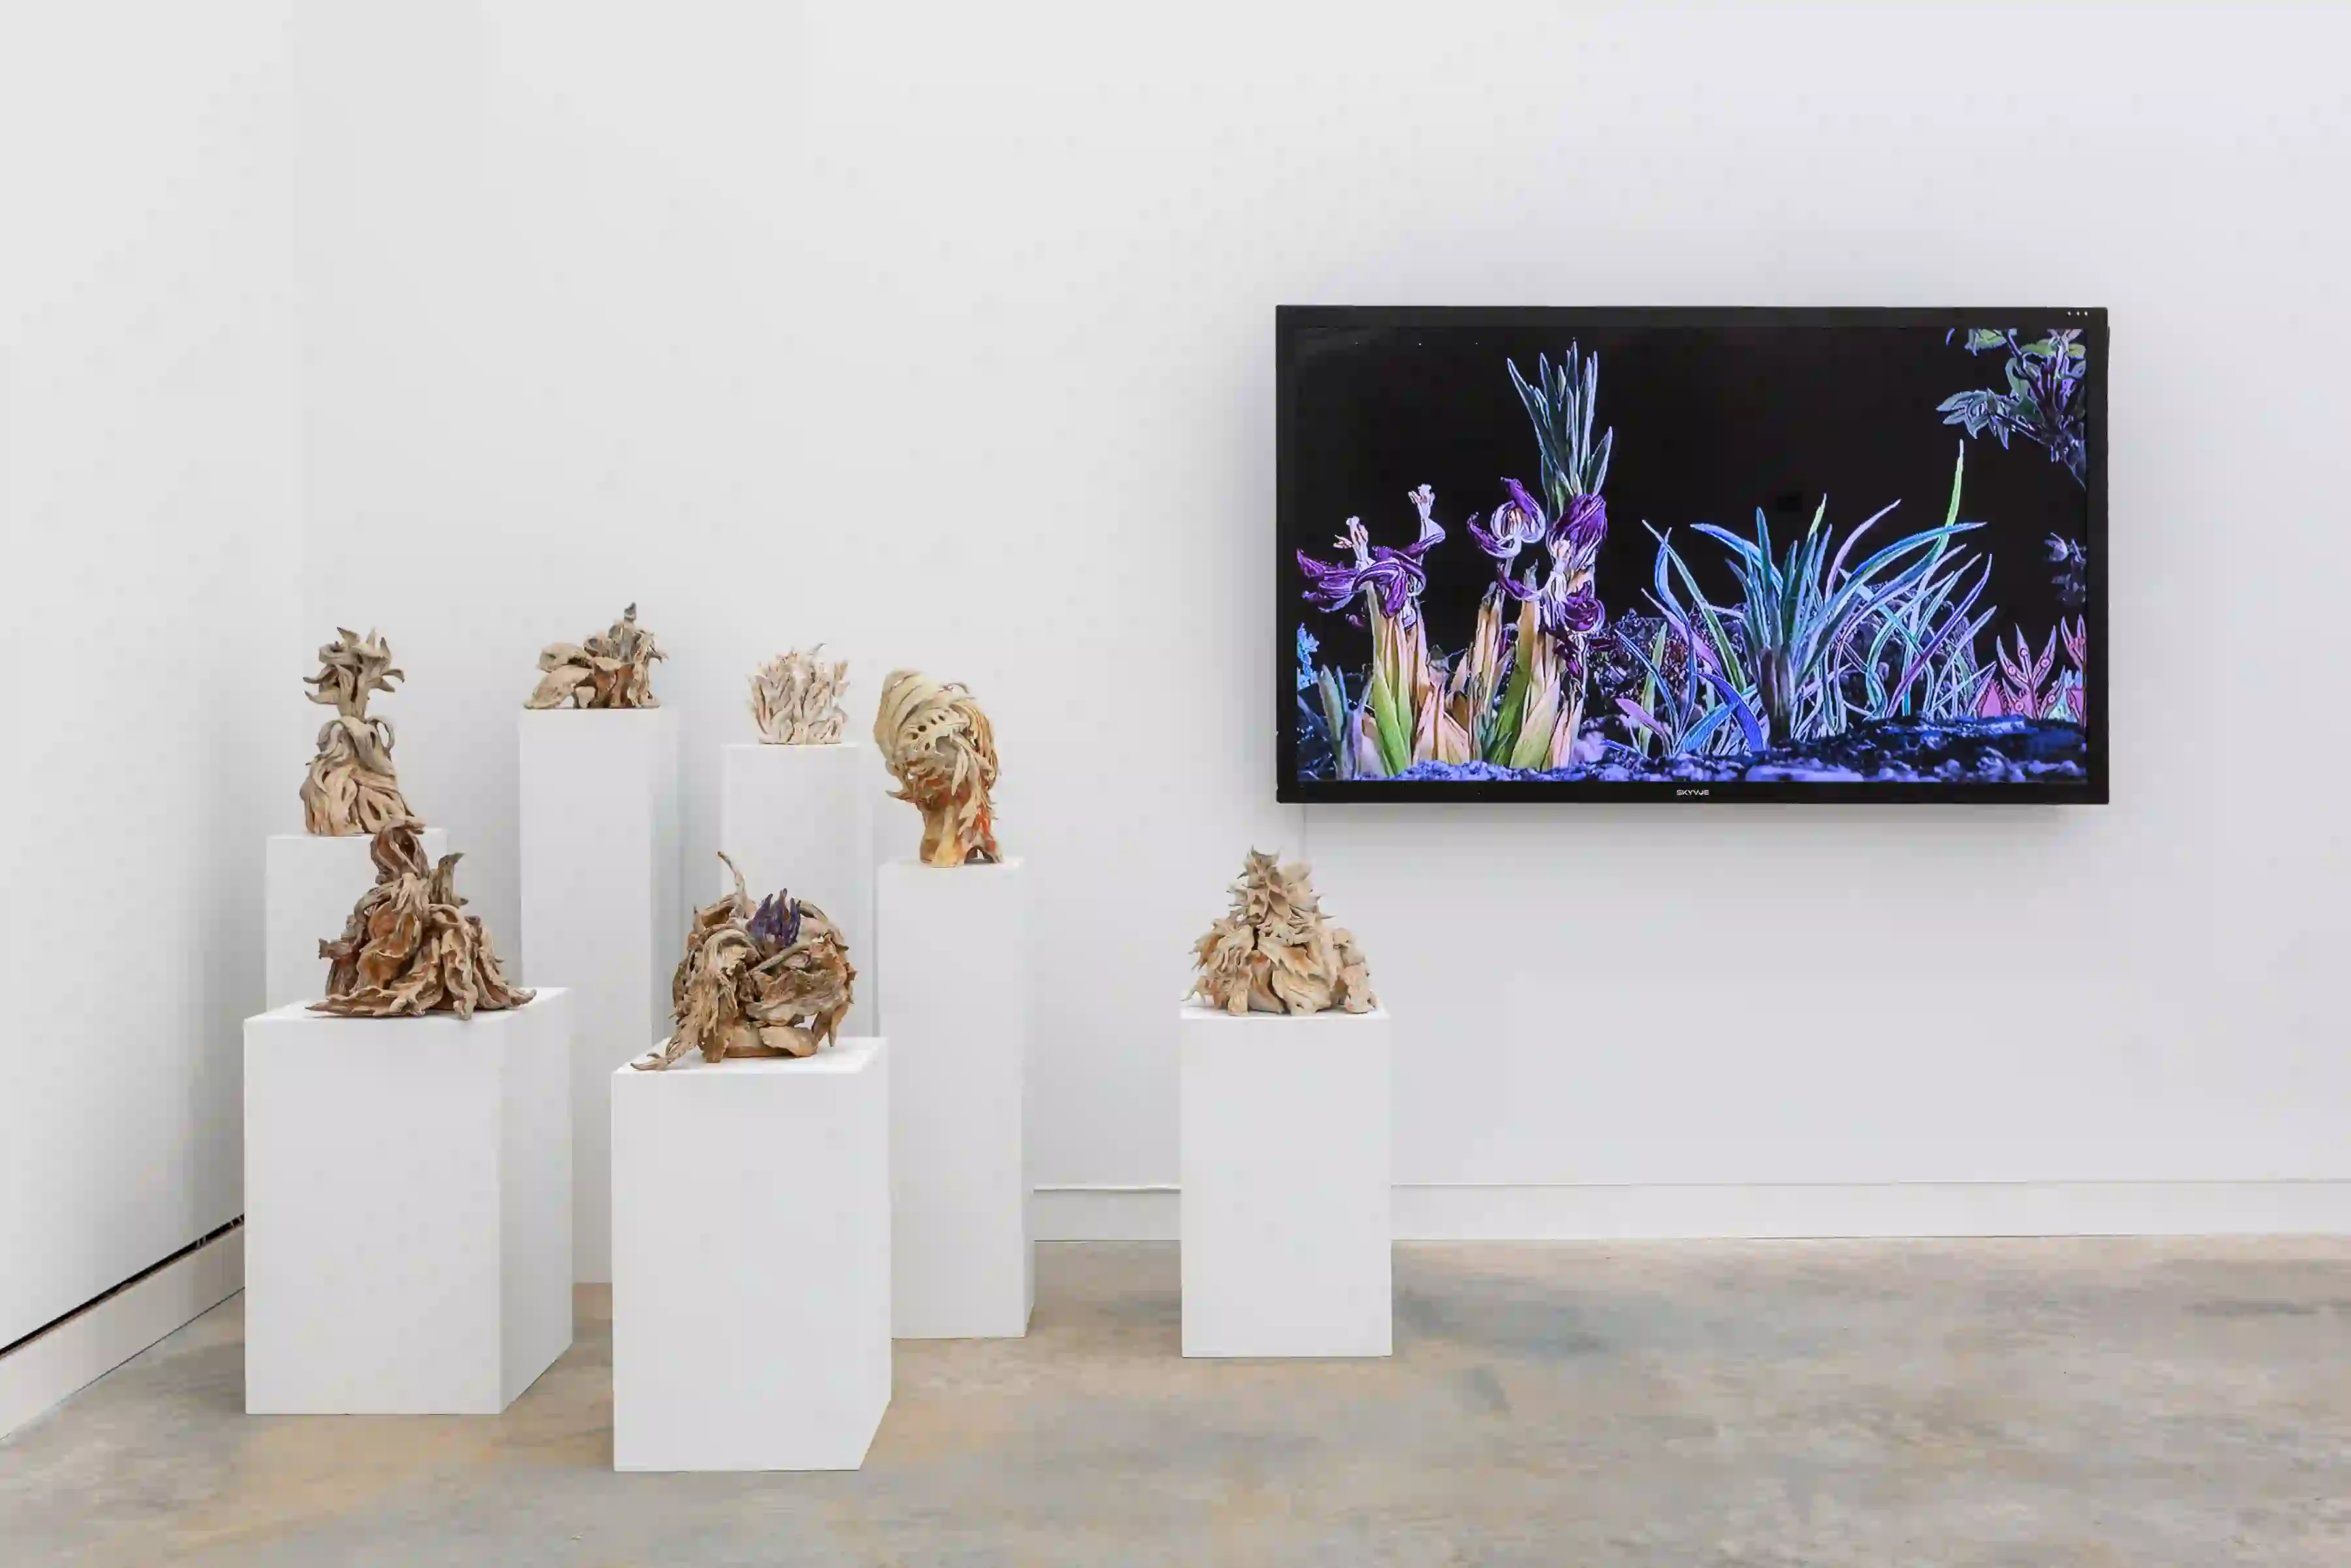 Francesco Simeti, 'The Wilds XVII,' 2017, 'Eryngo,' 2019, 'The Wilds XII,' 2019, 'Hellebore,' 2019, 'Palmata,' 2019, 'Mandrake,' 2018, 'The Wilds I,' 2013 (left); 'Unrelenting,' 2020 (right). Installation view of Homemade at Magazzino Italian Art.